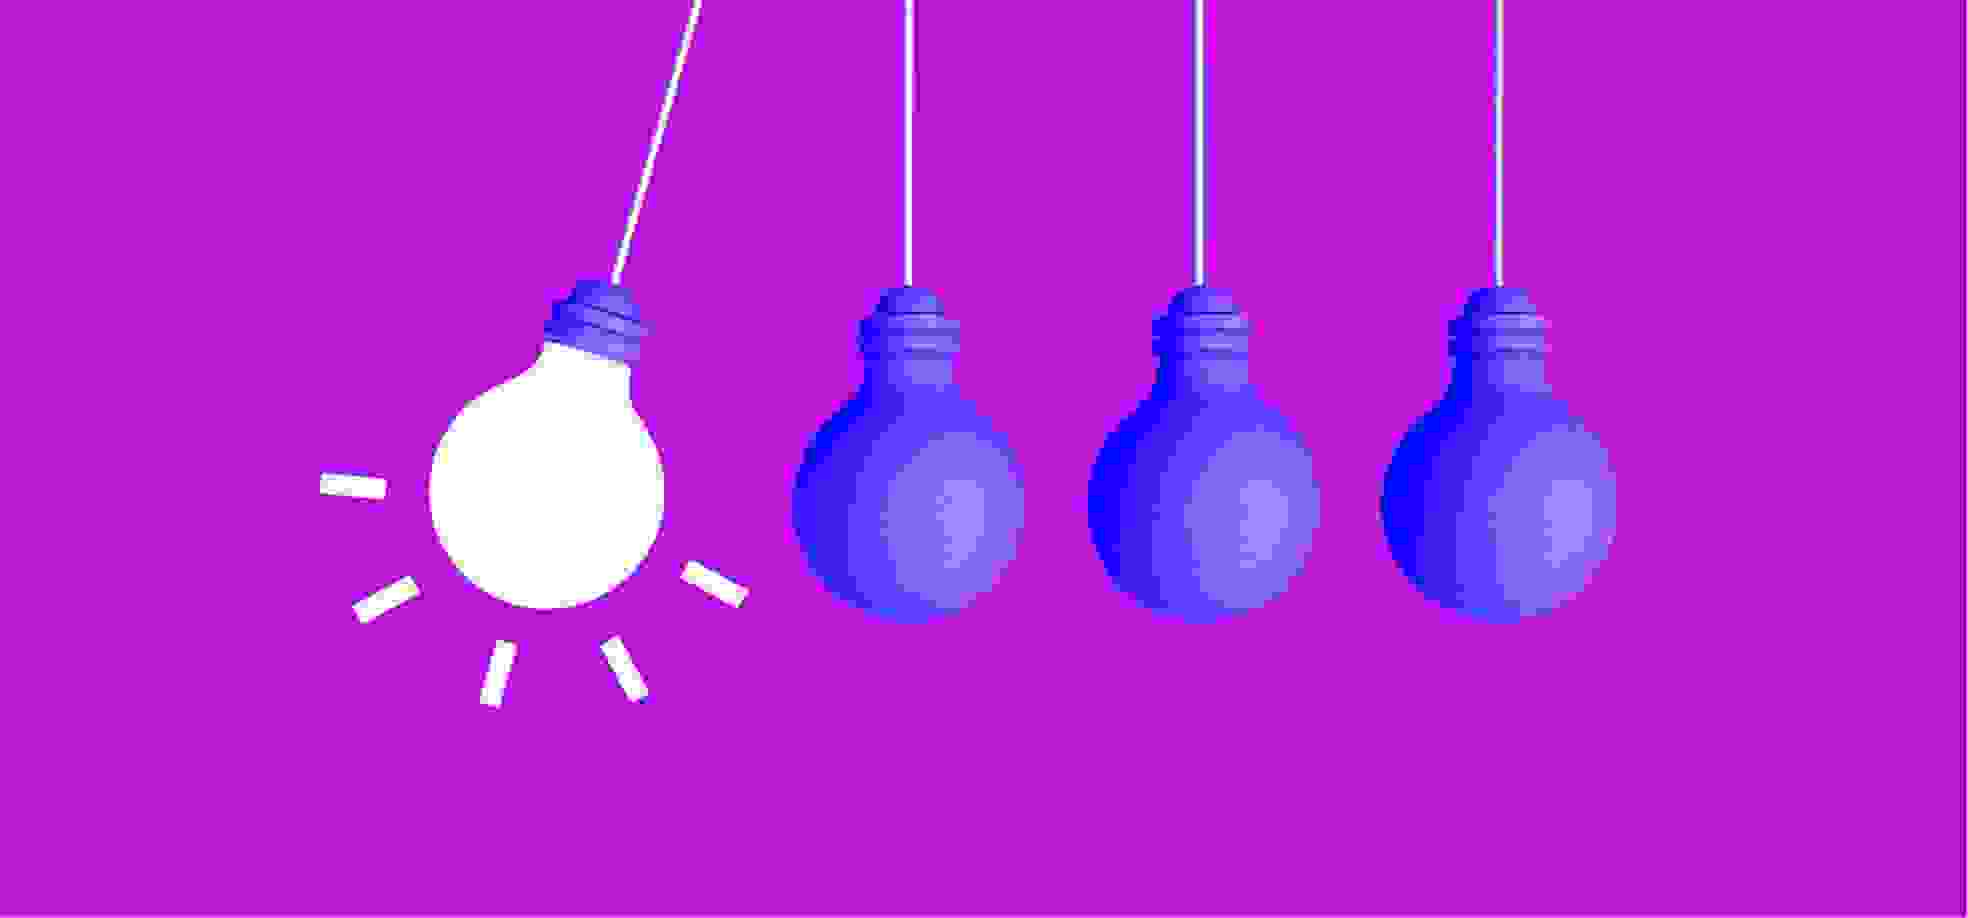 four blue light bulbs illustration on a purple background